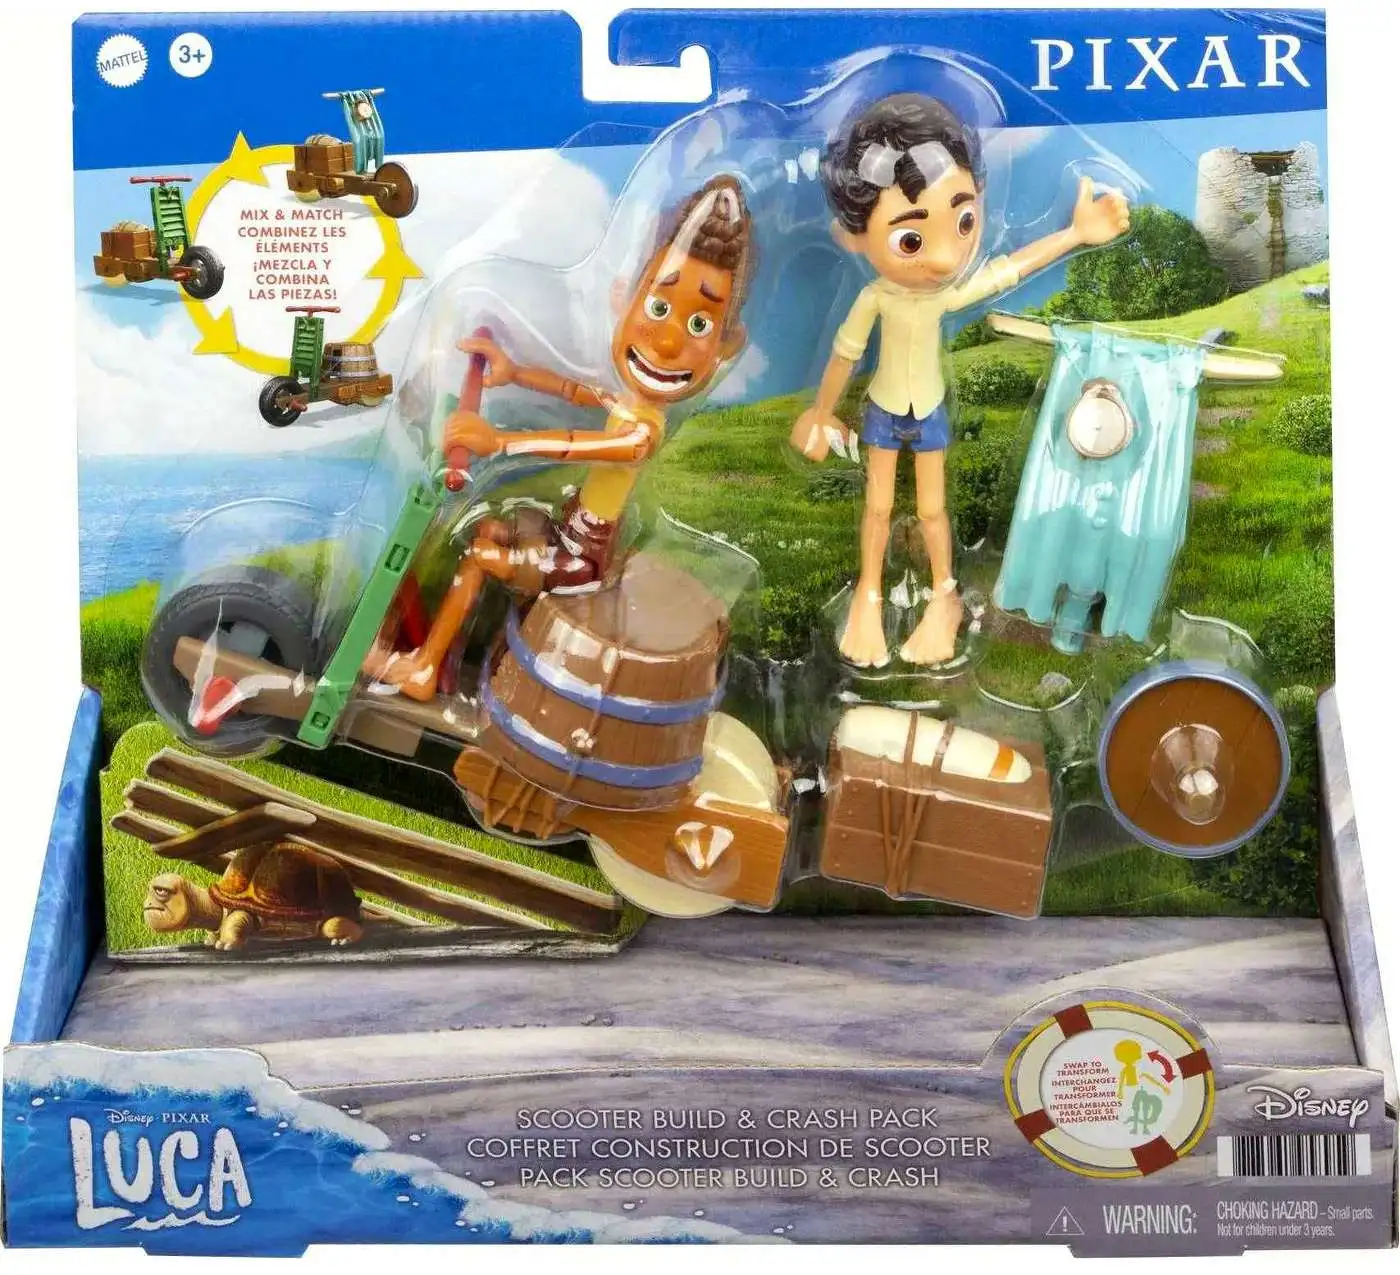 NEW 2021 SHIP NOW Mattel Disney Pixar Luca Scooter Build & Crash Pack 